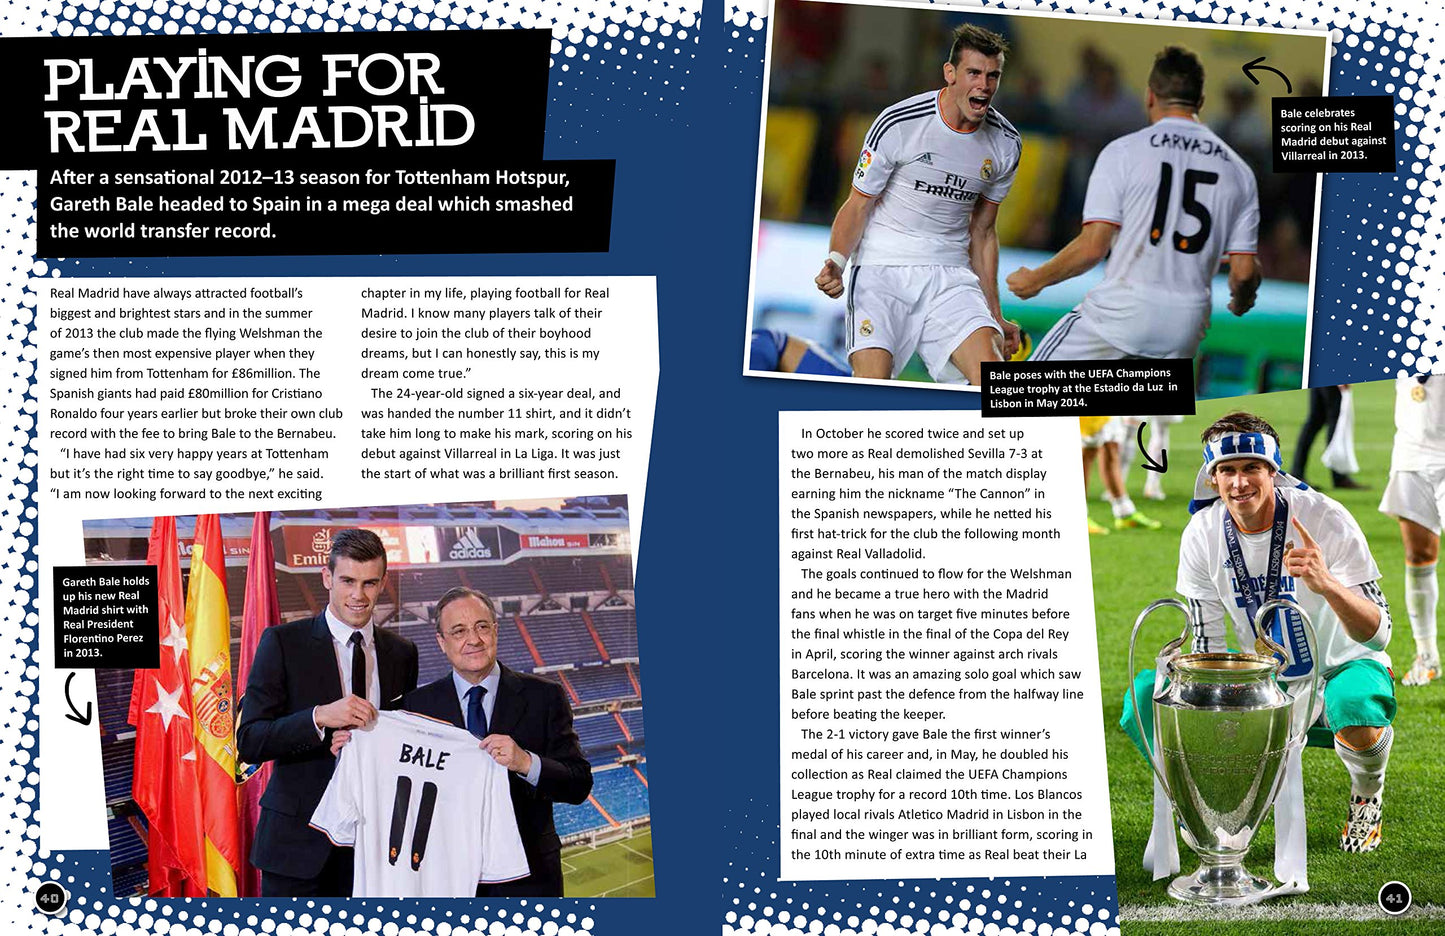 Gareth Bale: The Ultimate Fan Book